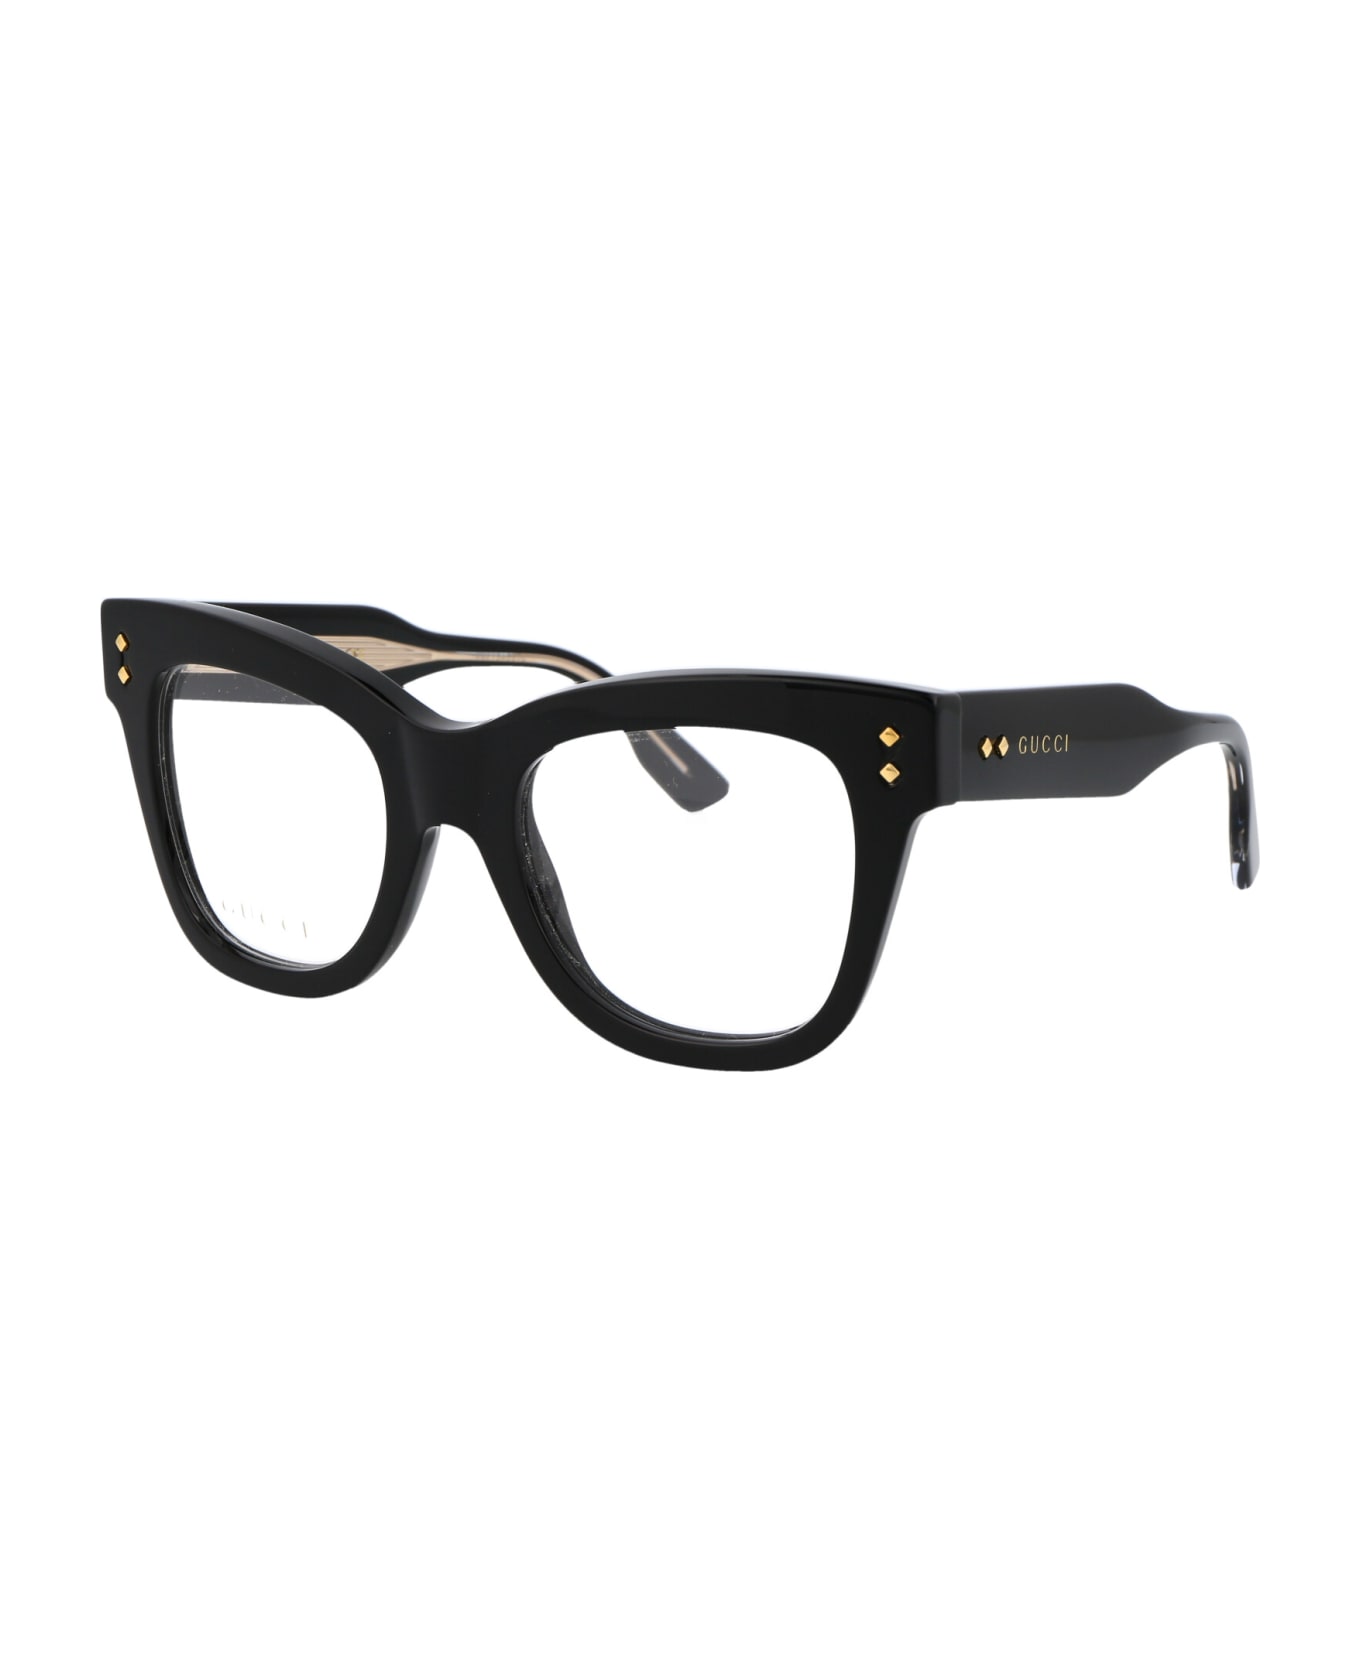 Gucci Eyewear Gg1082o Glasses - 001 BLACK BLACK TRANSPARENT